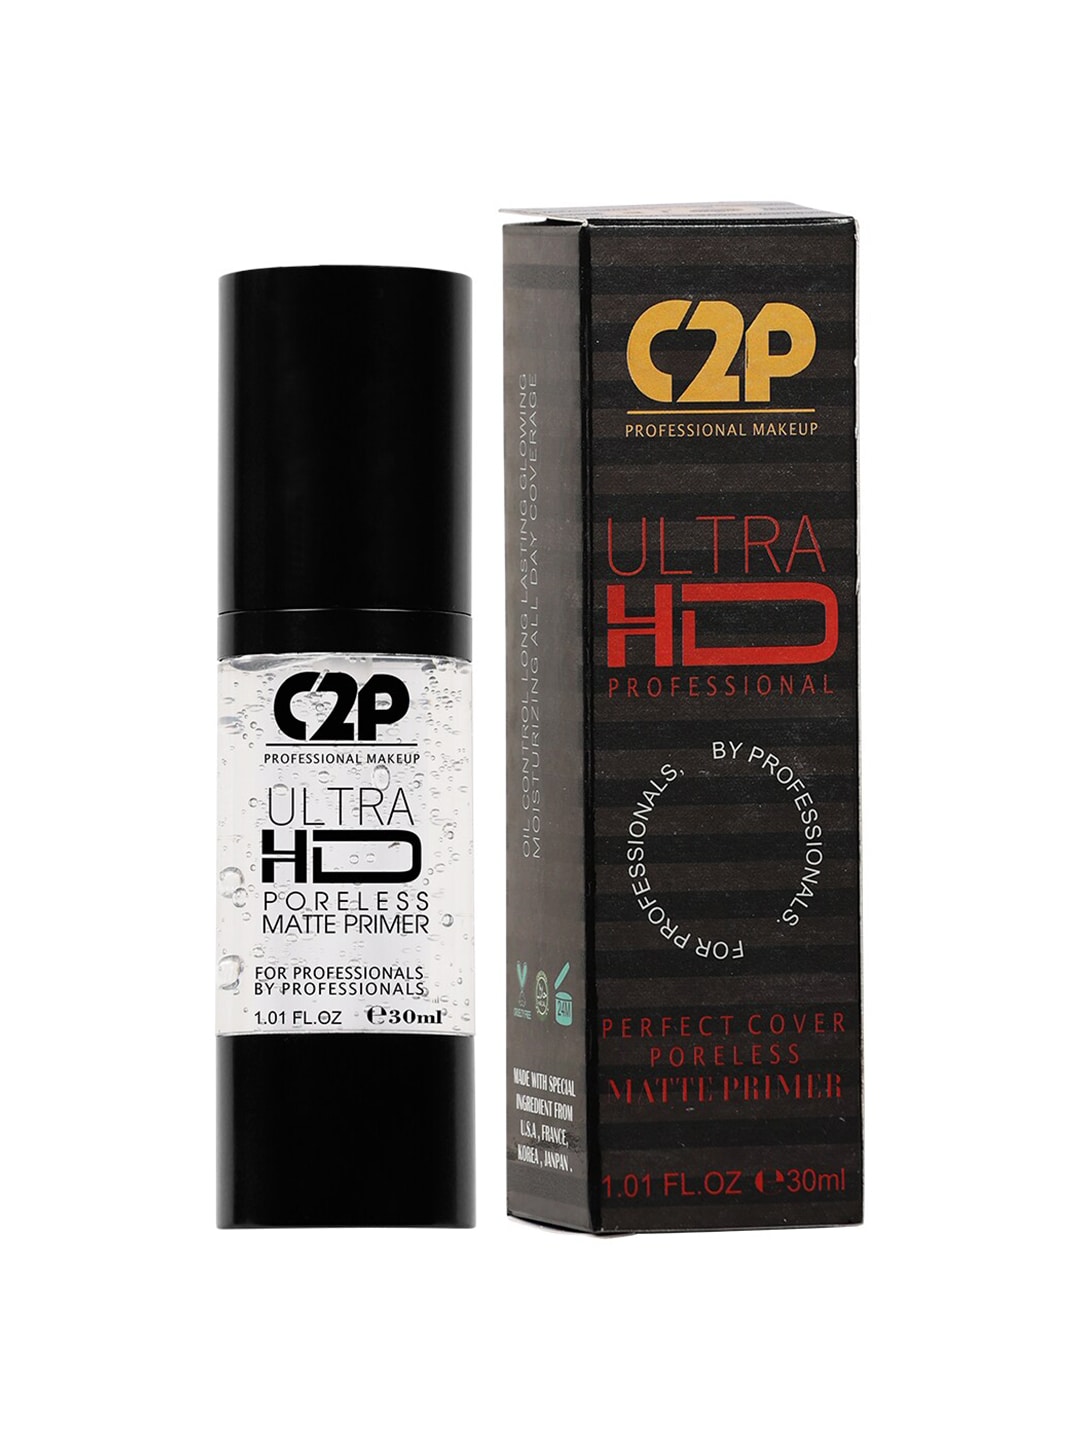 C2P PROFESSIONAL MAKEUP Ultra HD Poreless Matte Primer 30 ml Price in India